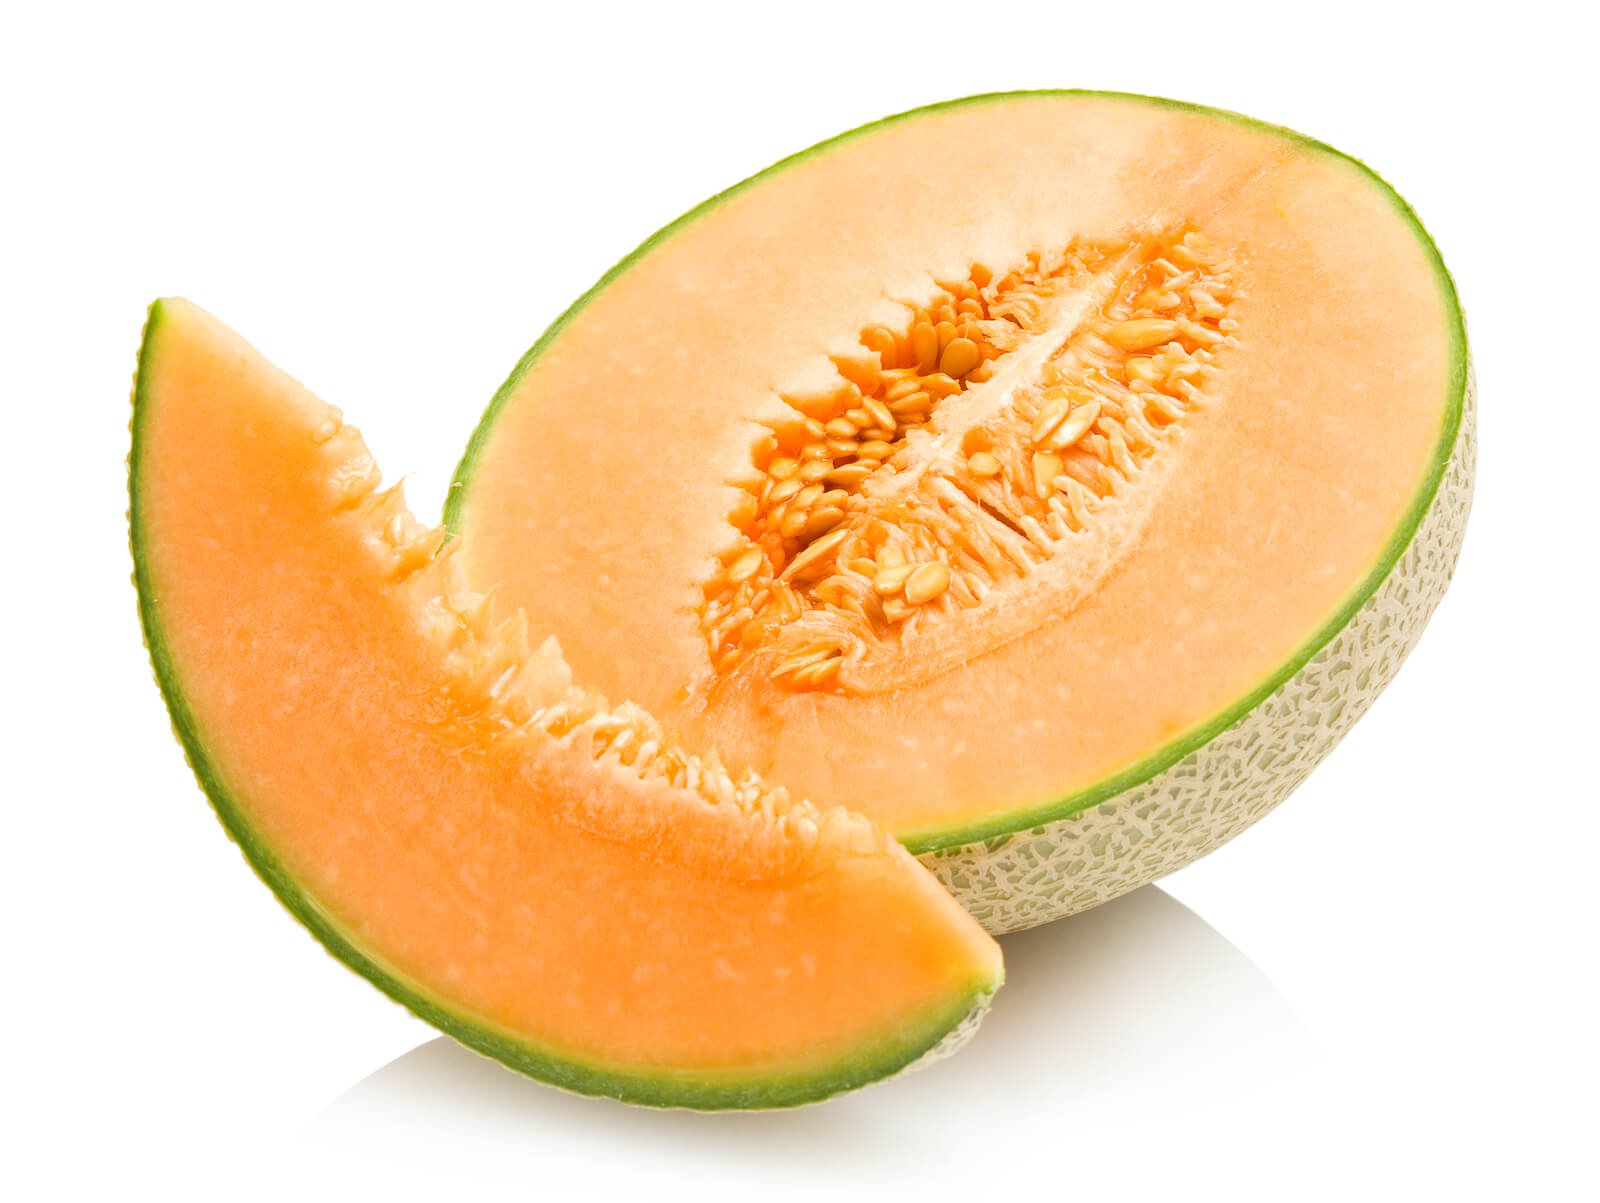 Cantaloupe Nutrition, Benefits & How to Pick a Good Melon - Dr. Axe